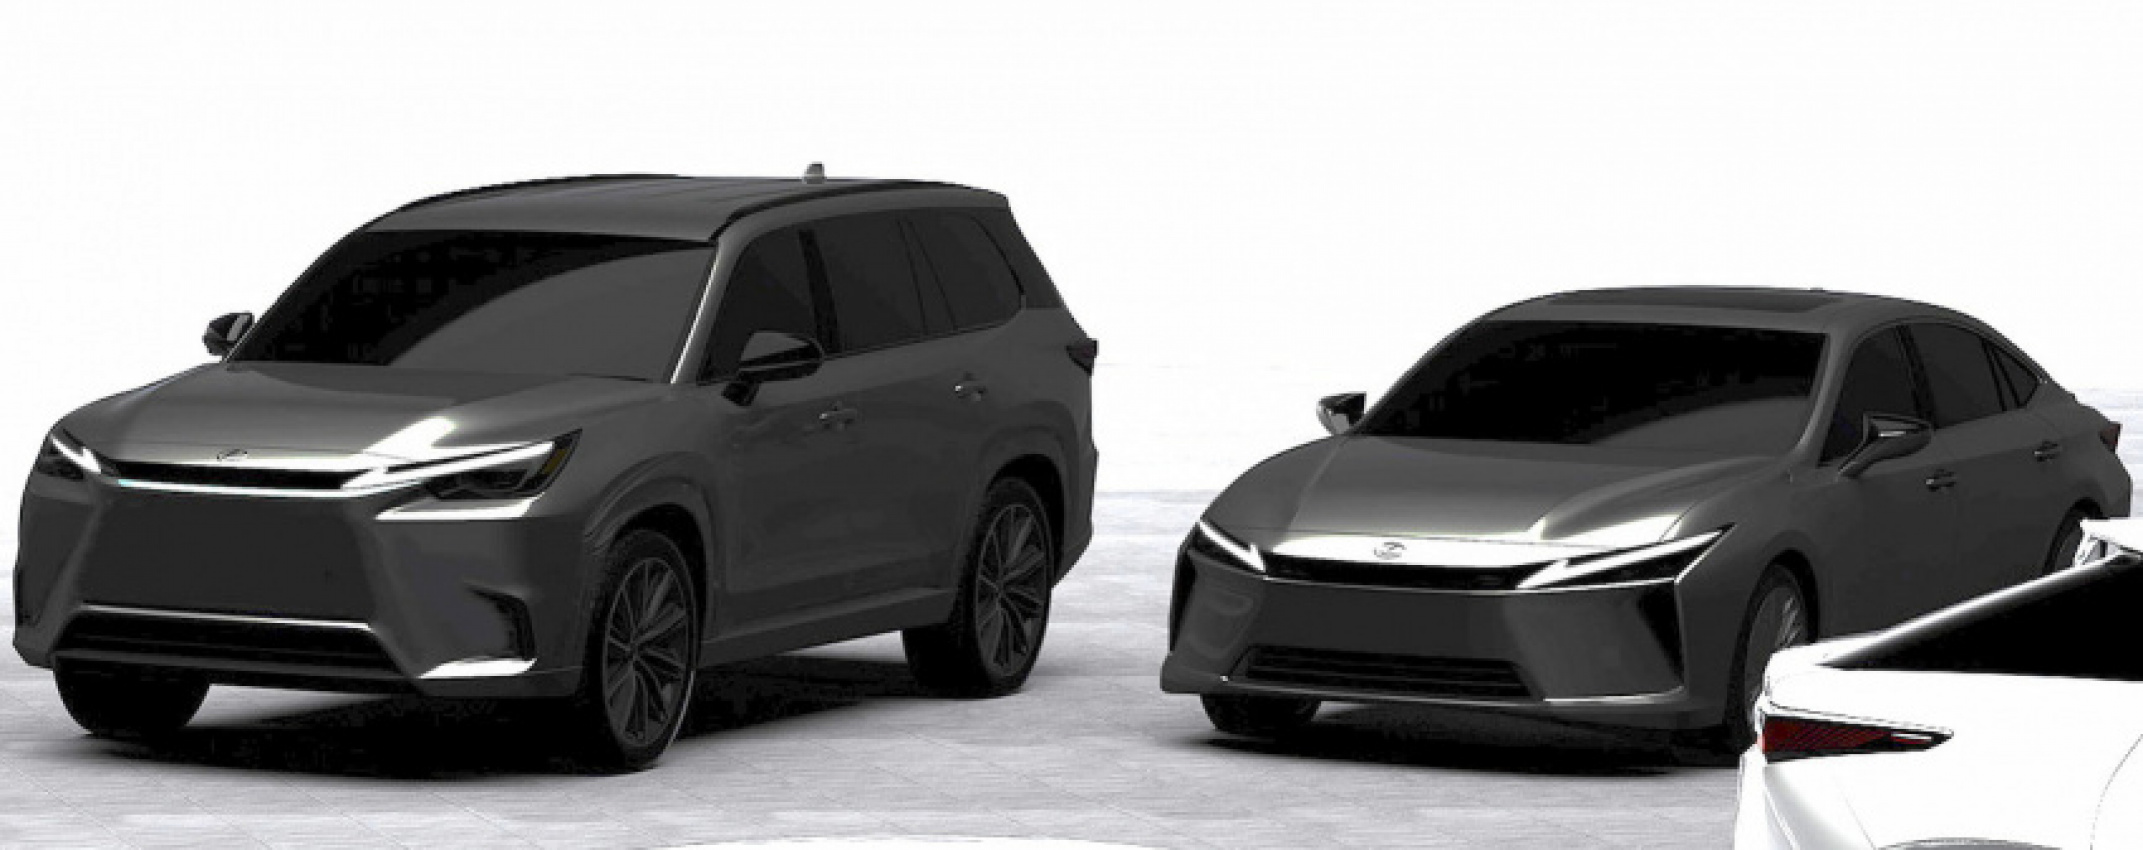 autos, cars, electric vehicle, lexus, lexus hybrid suv, purported lexus lbx/lbz teased in official presentation [update]